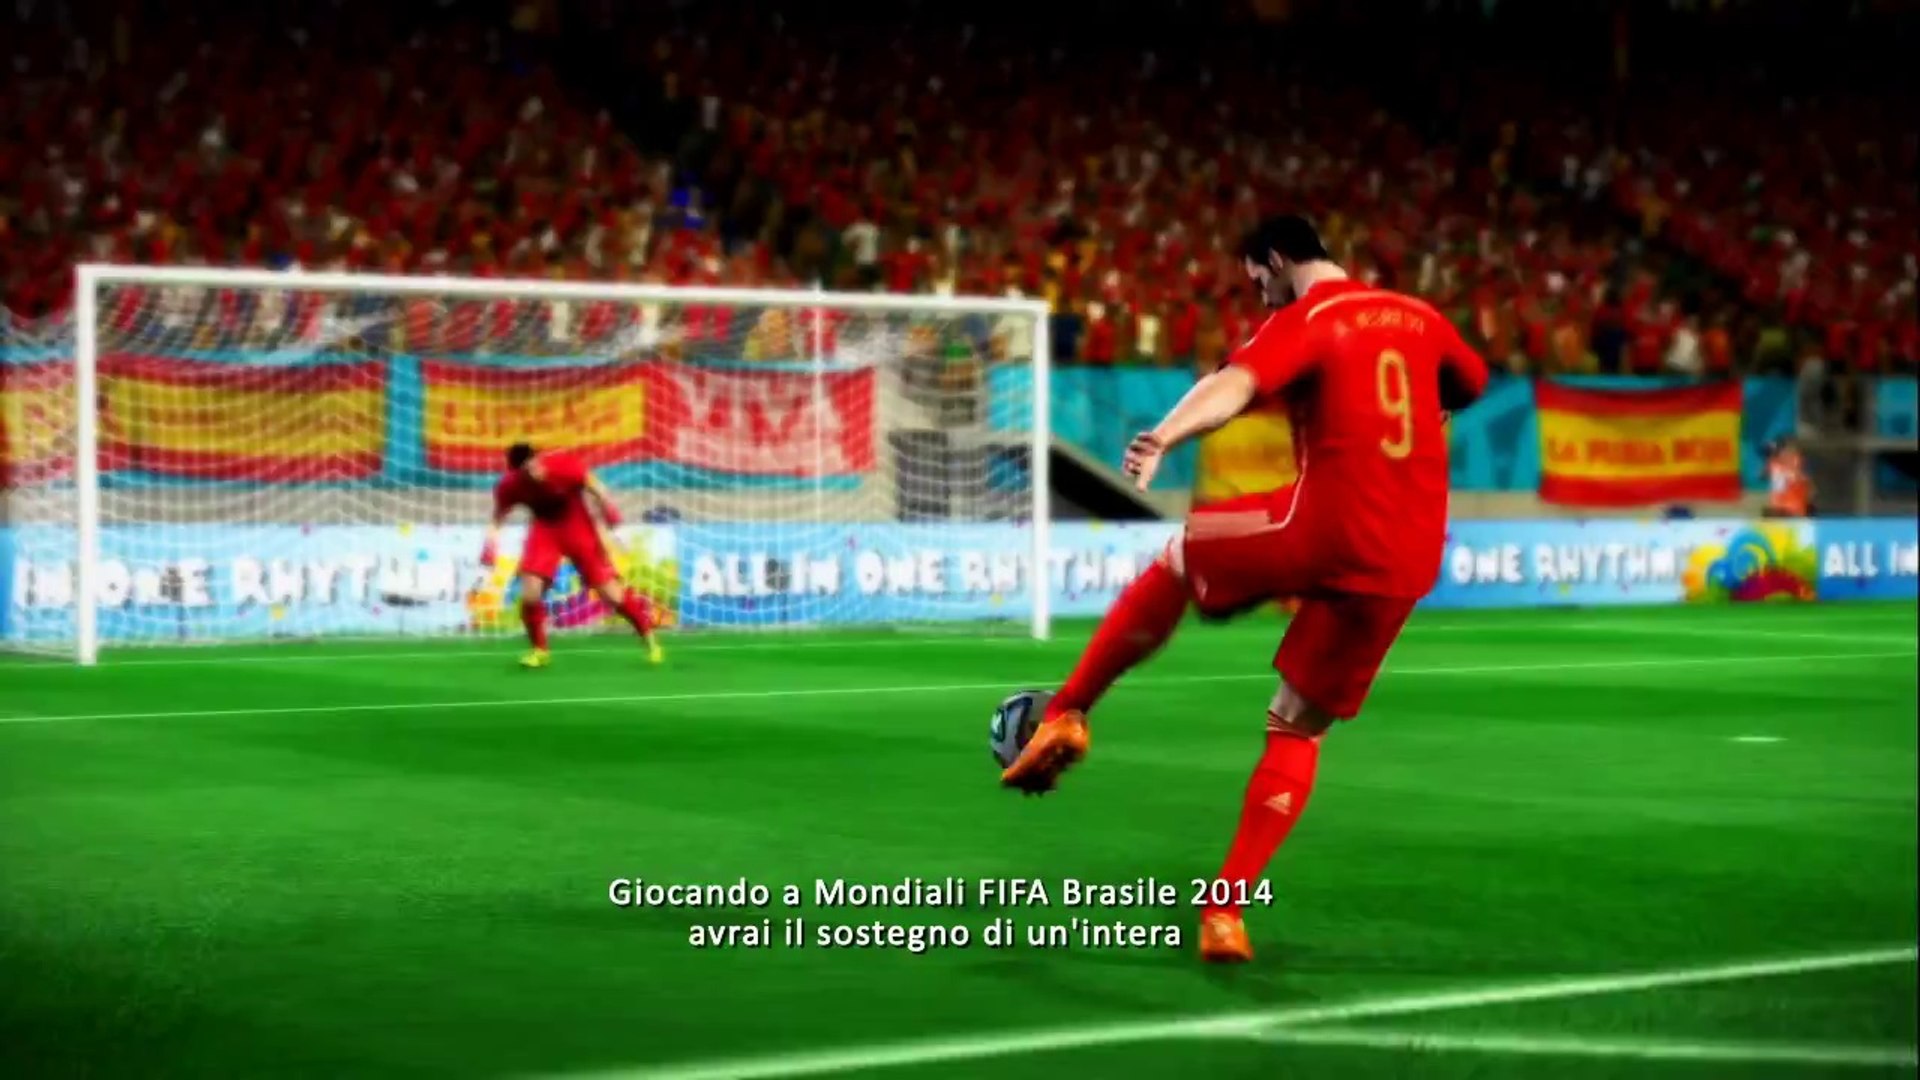 Mondiali FIFA Brasile 2014 - DevDiary Tifoserie - video Dailymotion